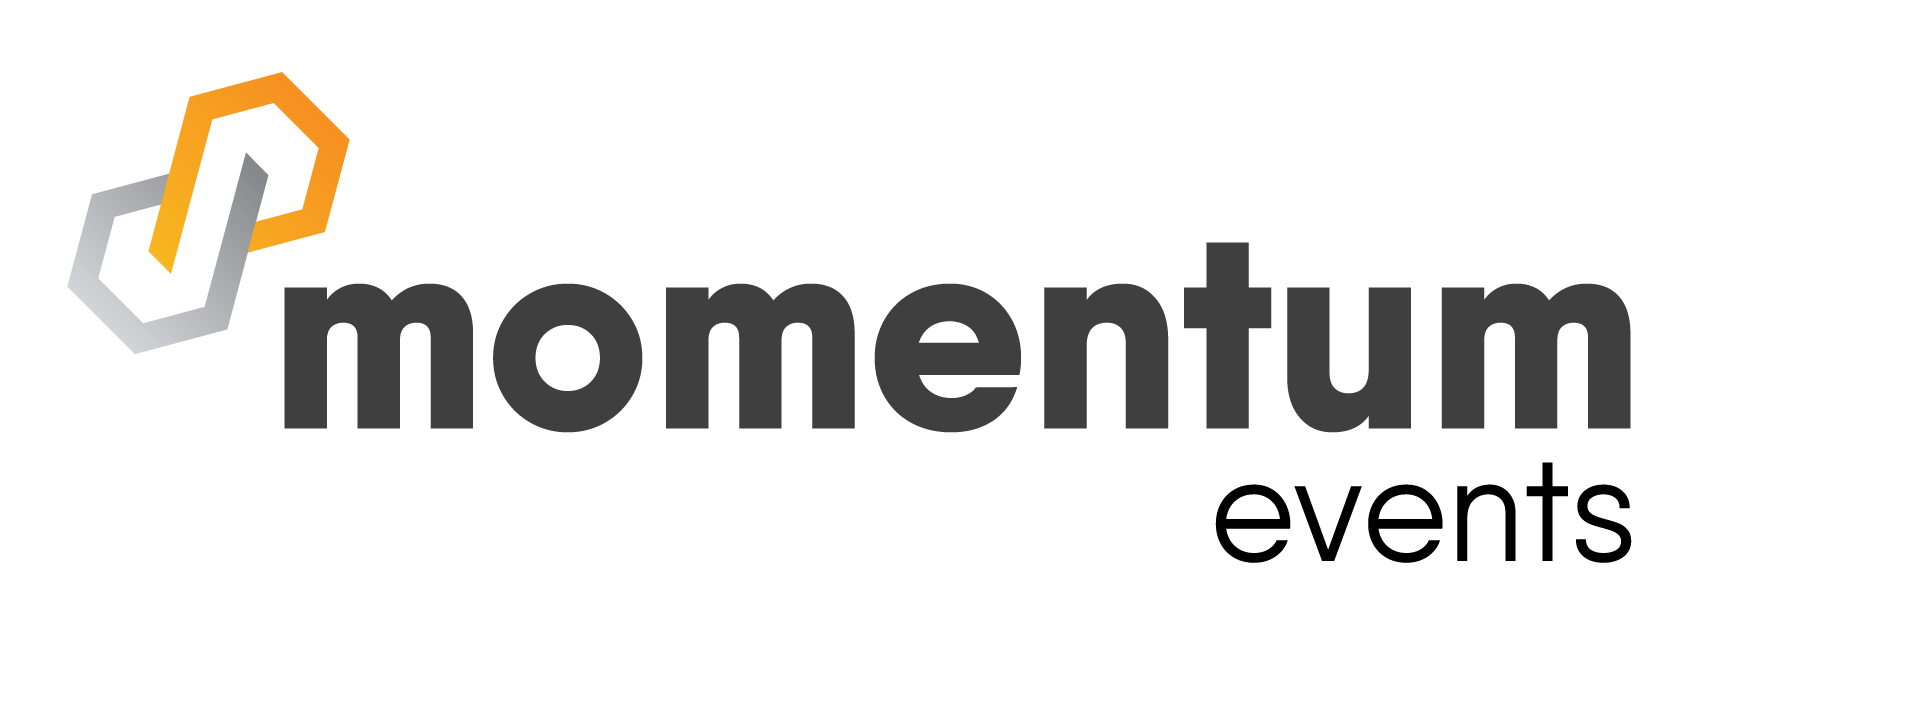 Momentum Events